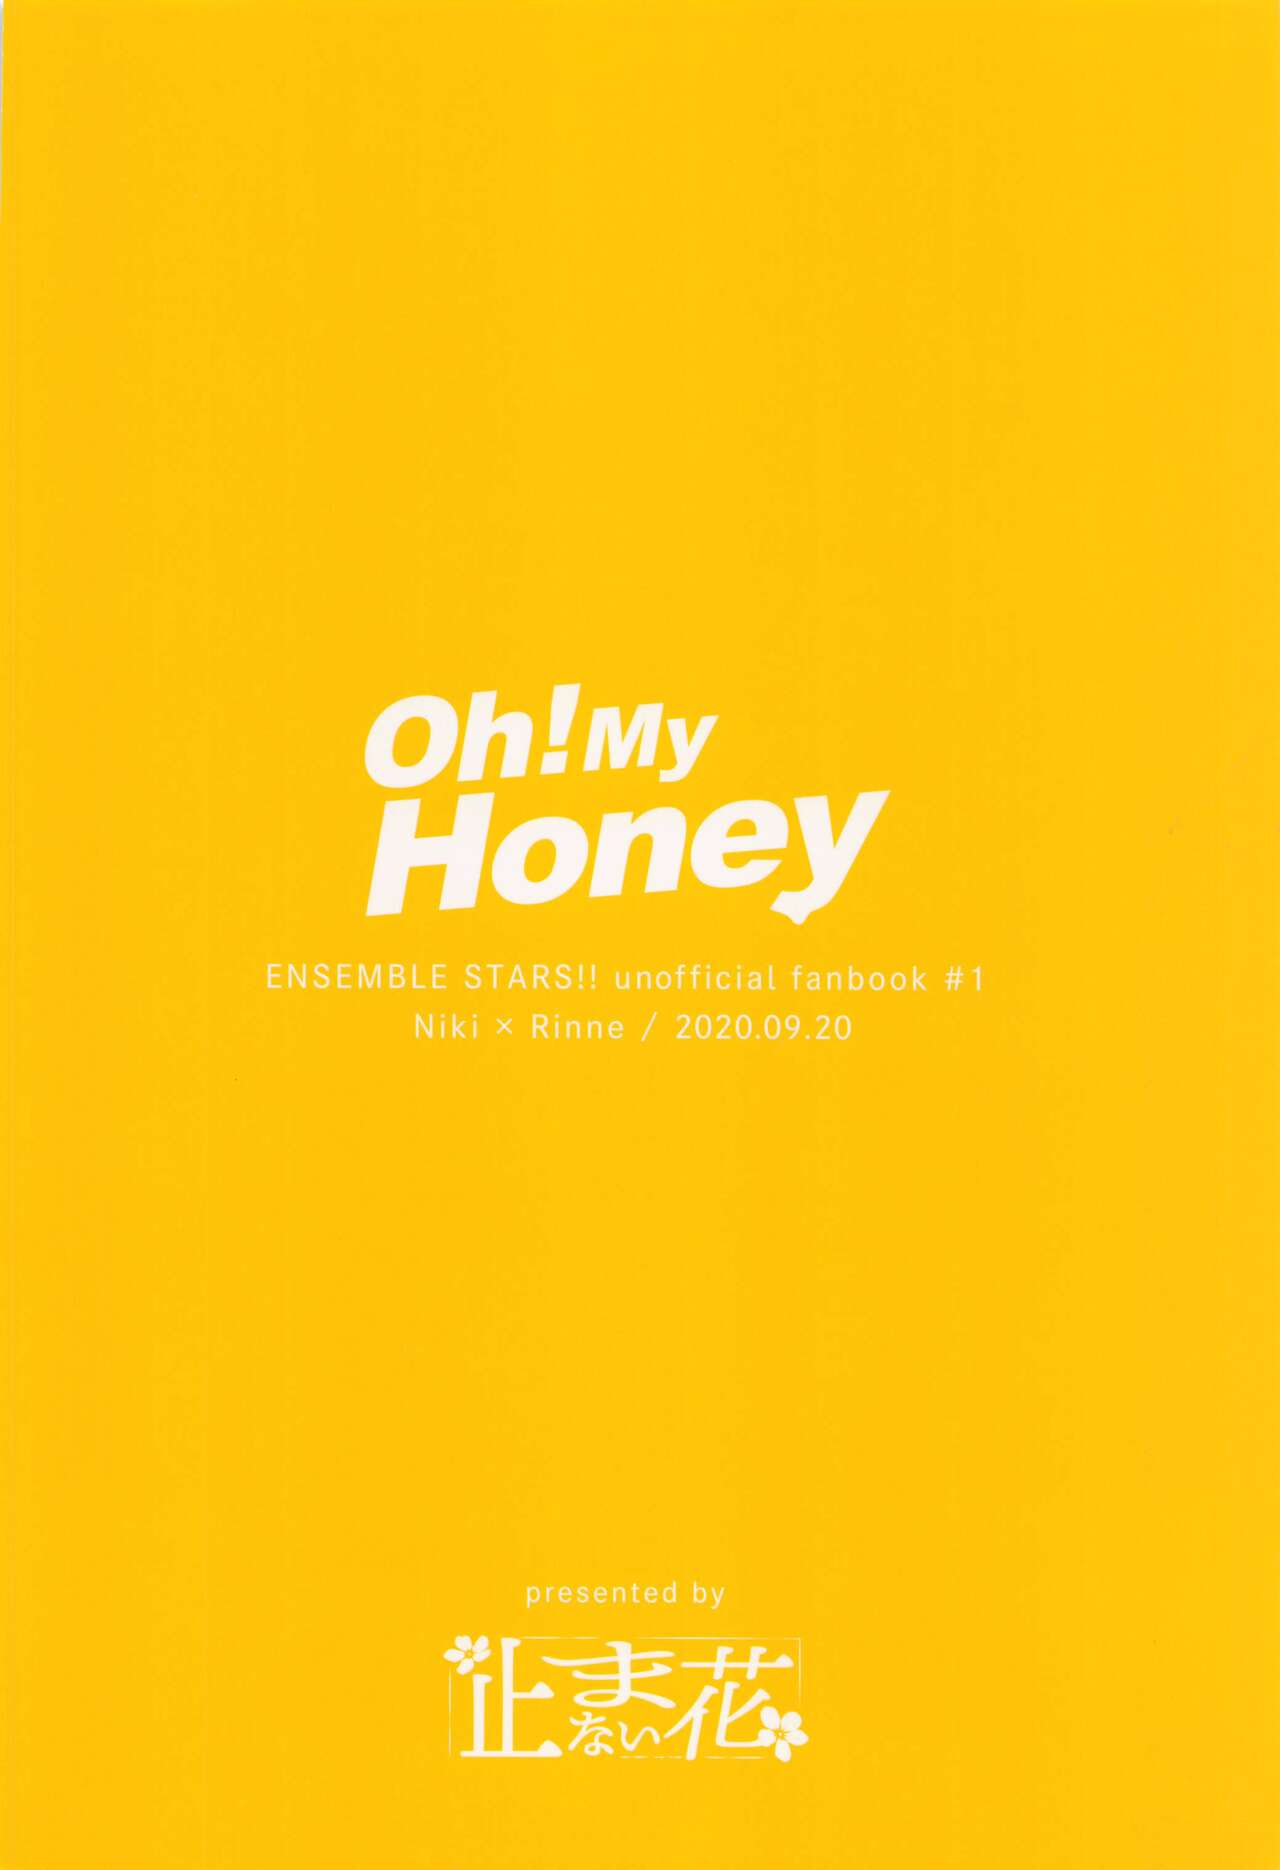 Oh! My Honey